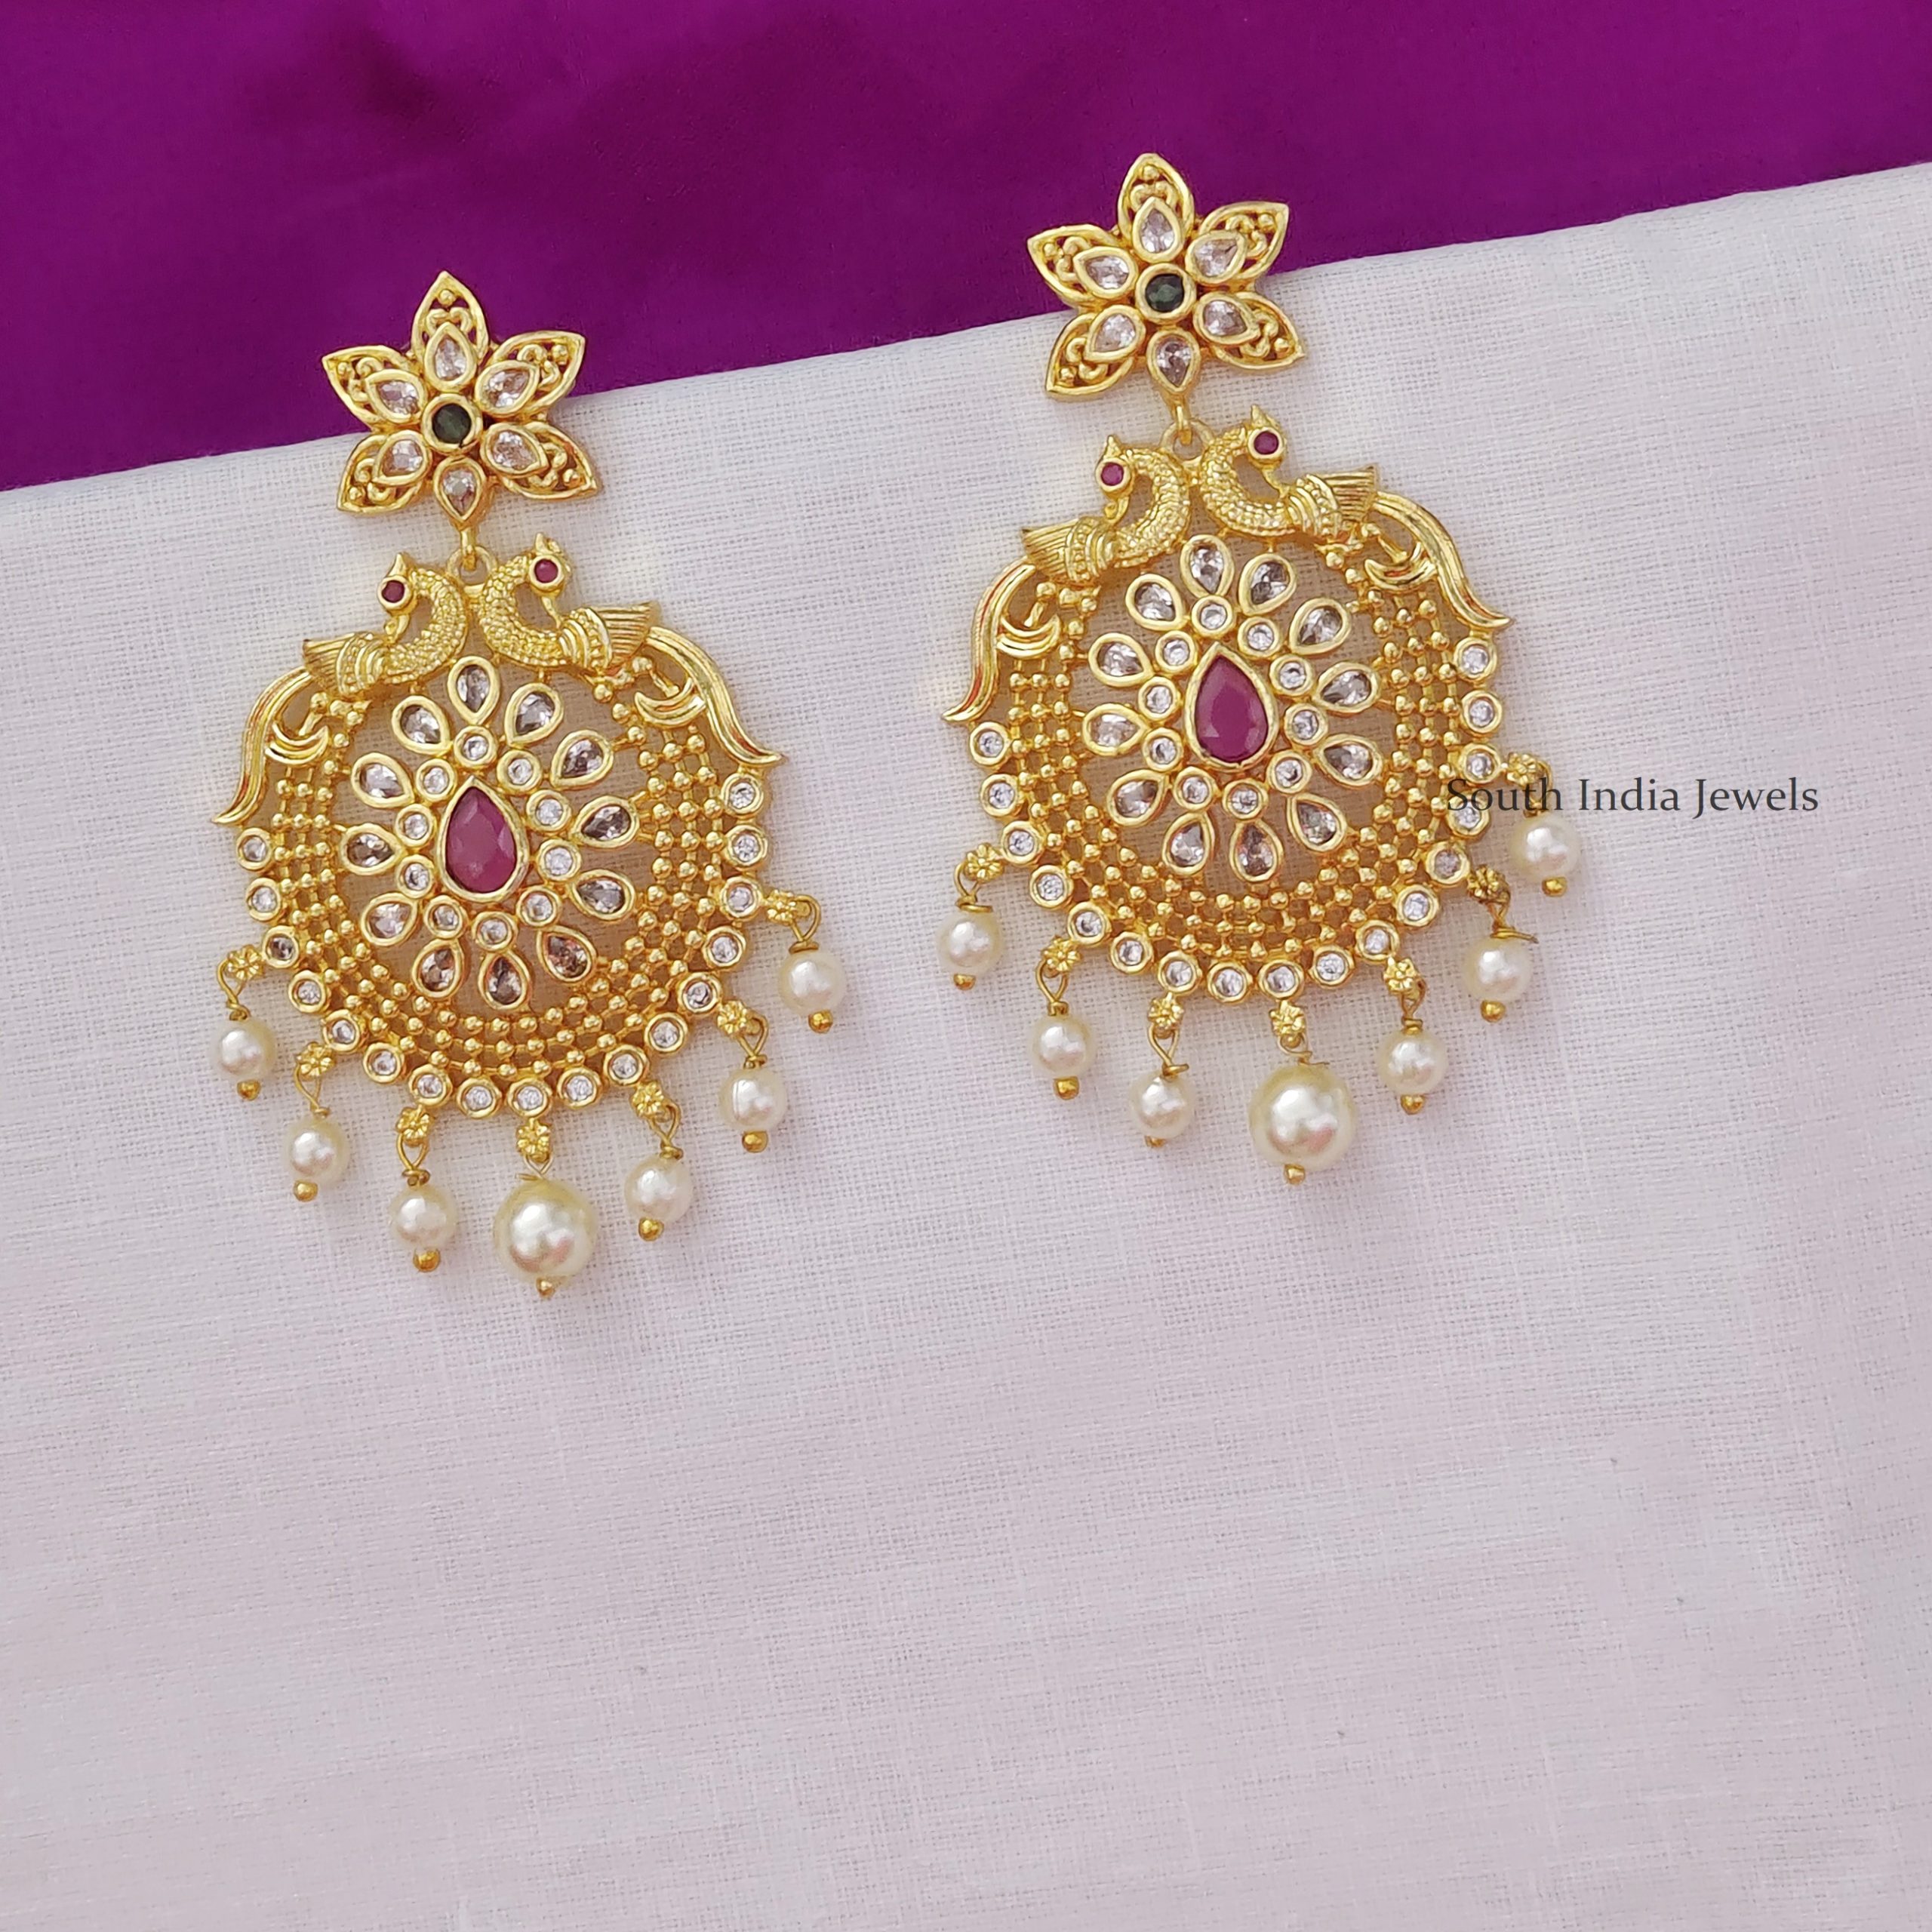 Discover 81+ chandbali earrings designs in gold super hot - esthdonghoadian